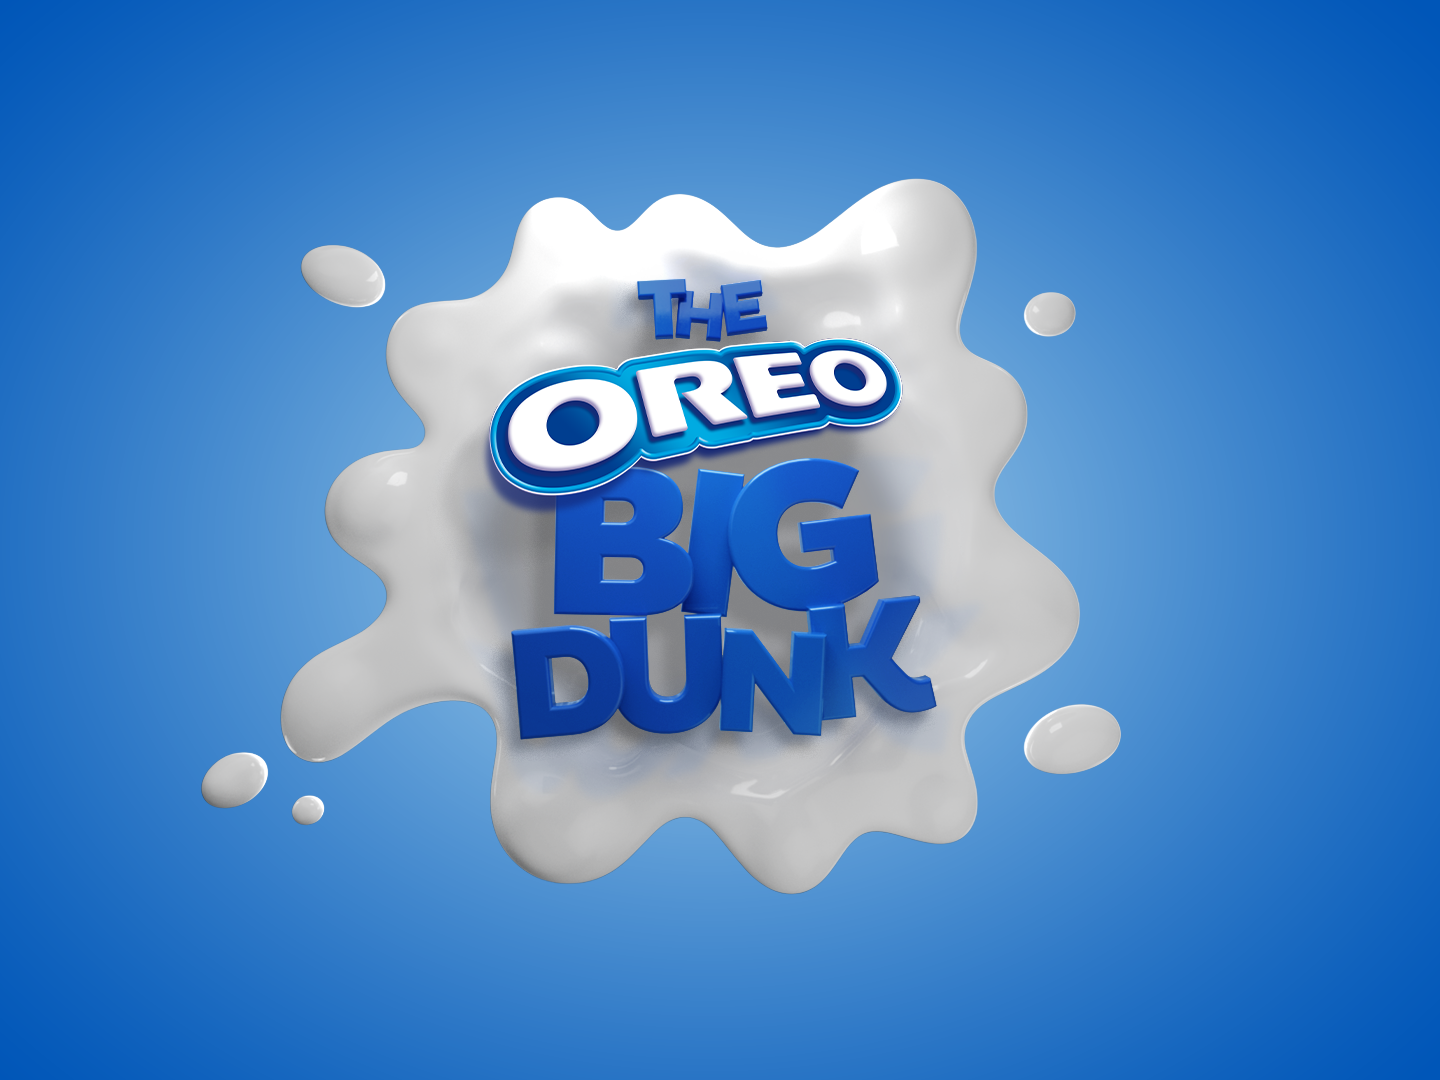 The Oreo Big Dunk